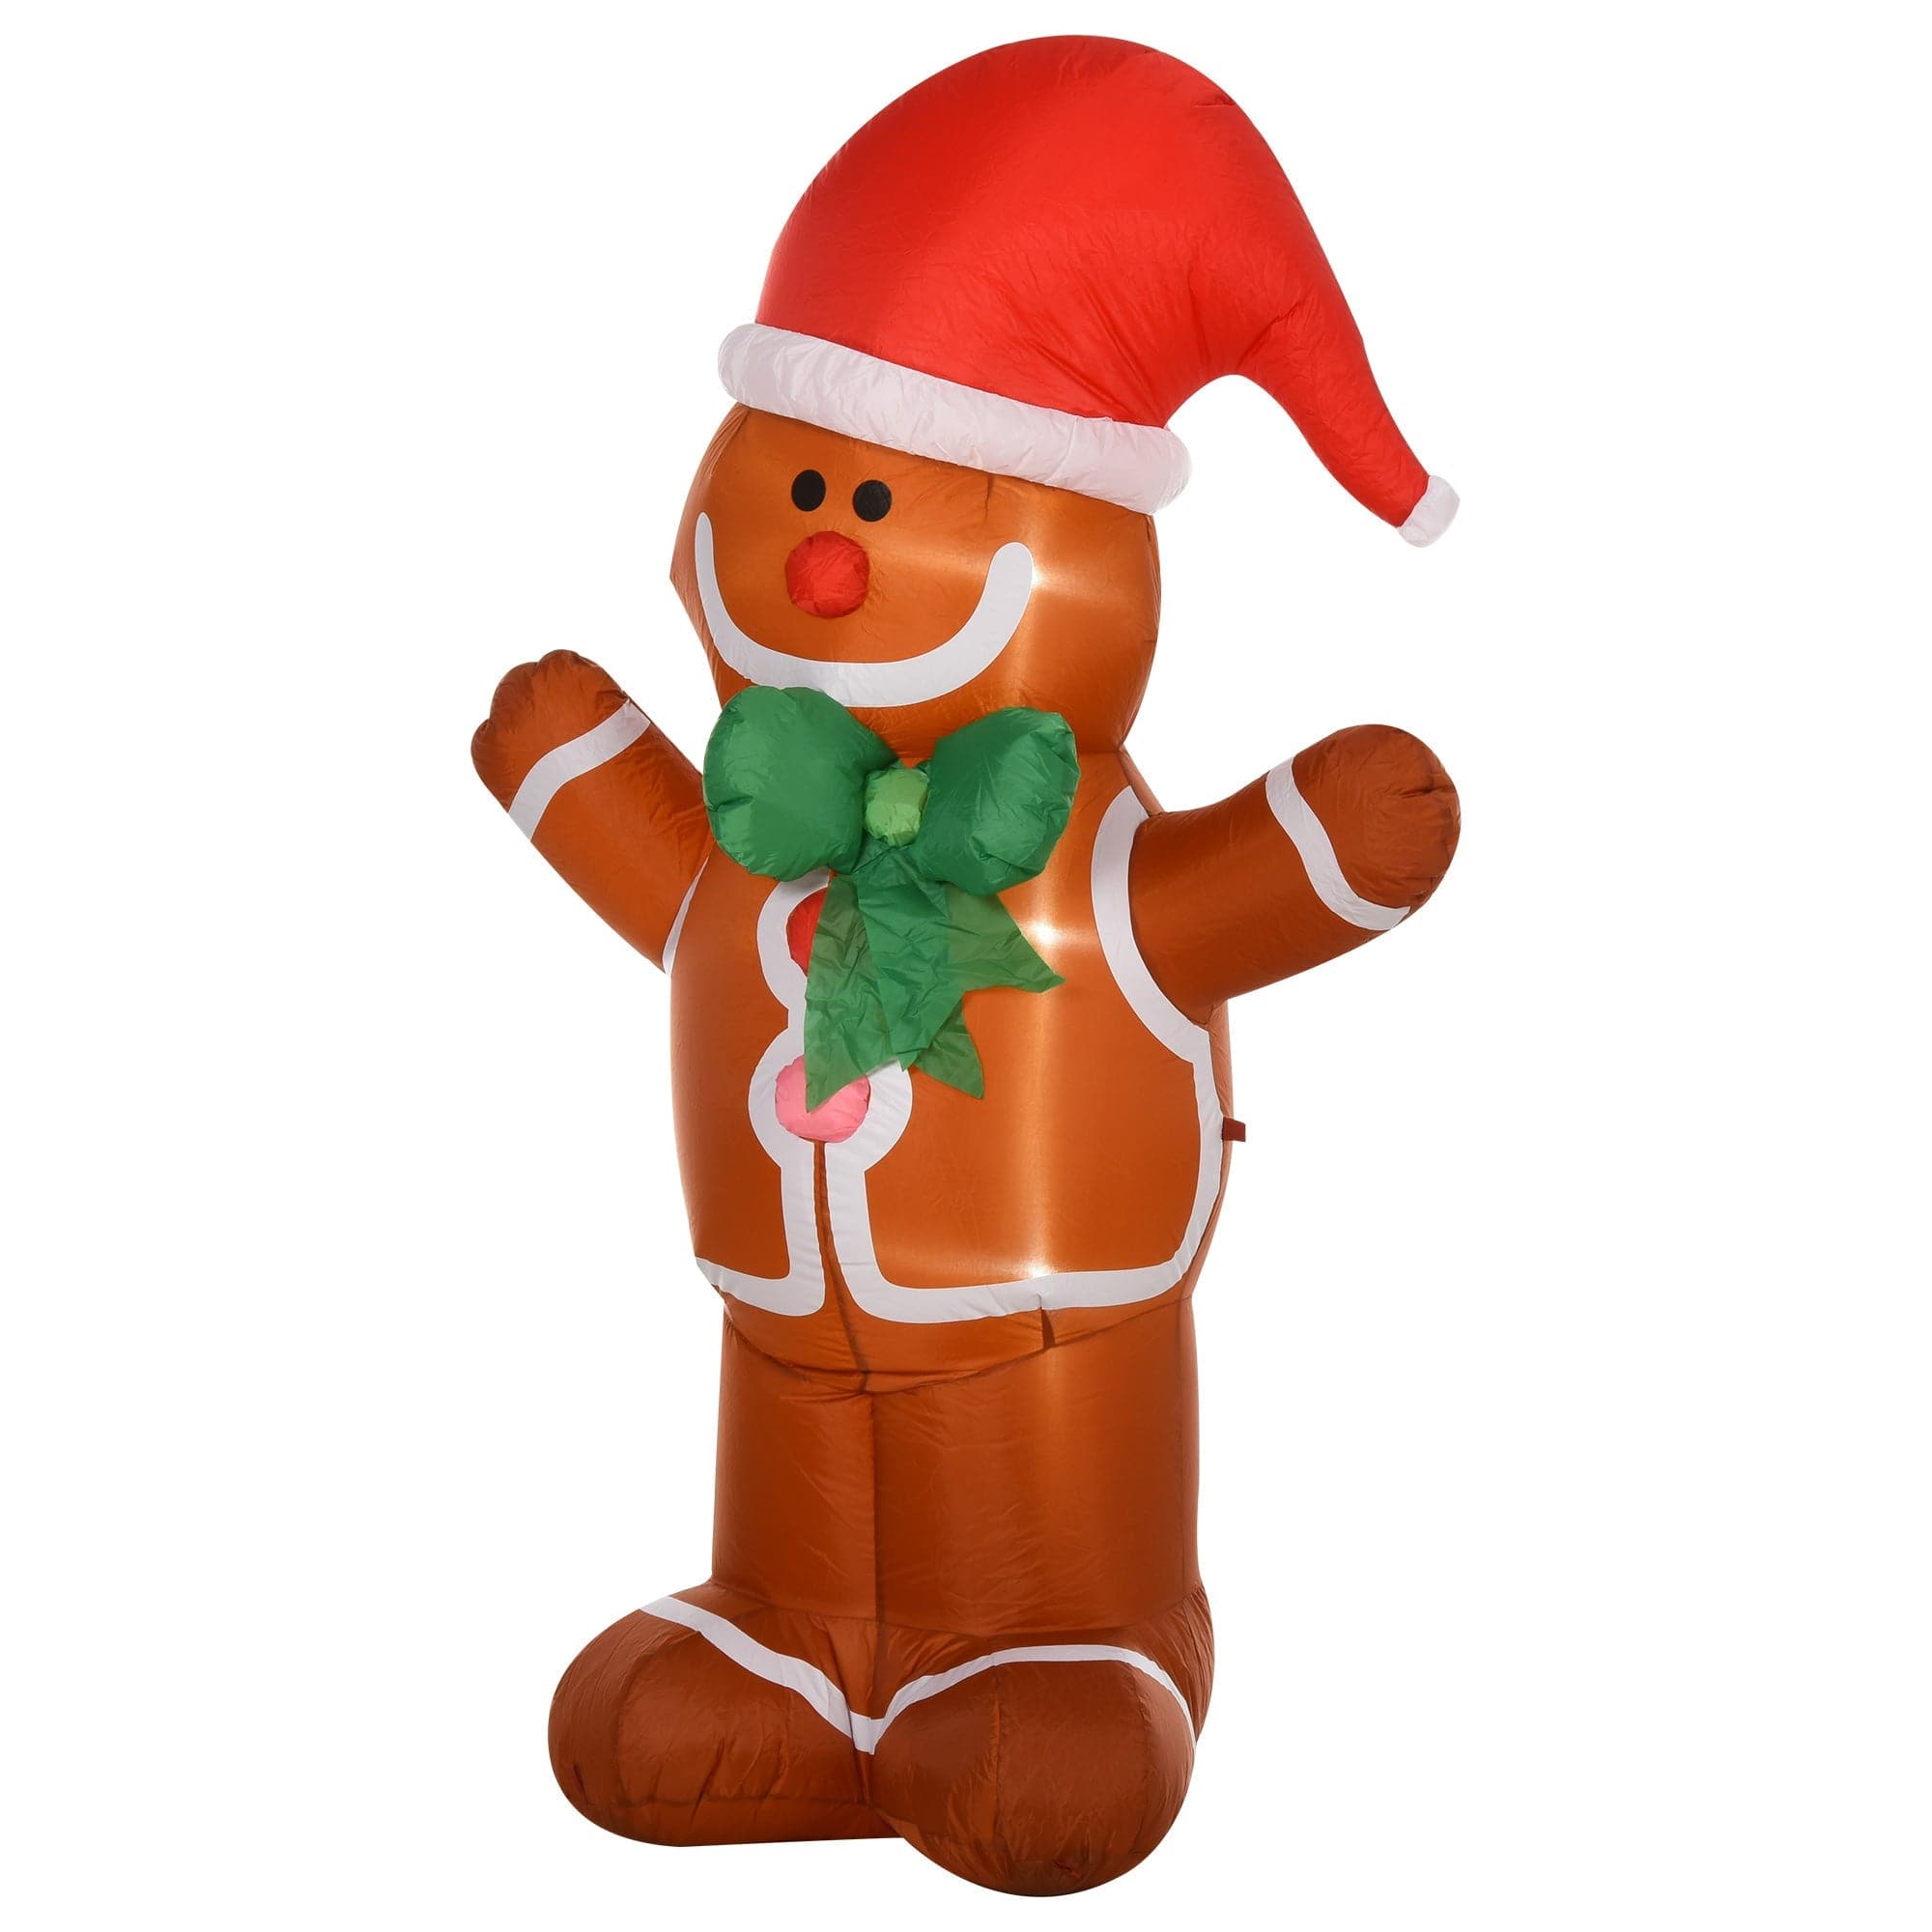 HOMCOM 6ft Christmas Inflatable LED Gingerbread Man with Santa Hat